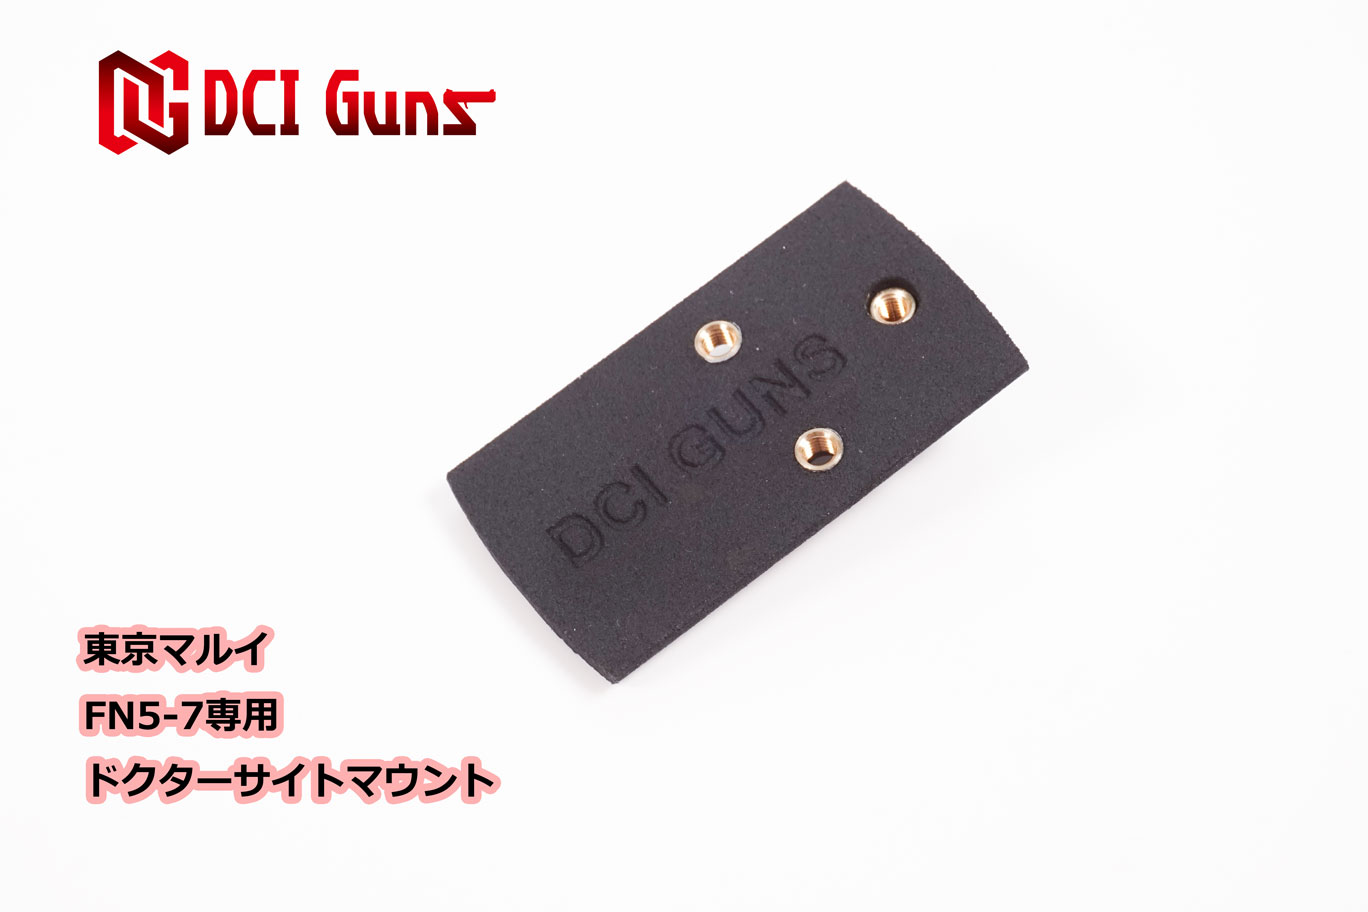 DCI Guns 東京マルイ FNファイブセブン(5-7)用ドクターサイトマウントV2.0 エアガン エアーガン ガスガン ブローバック カスタムパーツ ダットサイト ドットサイト 光学機器 サバイバルゲーム マイクロプロサイト